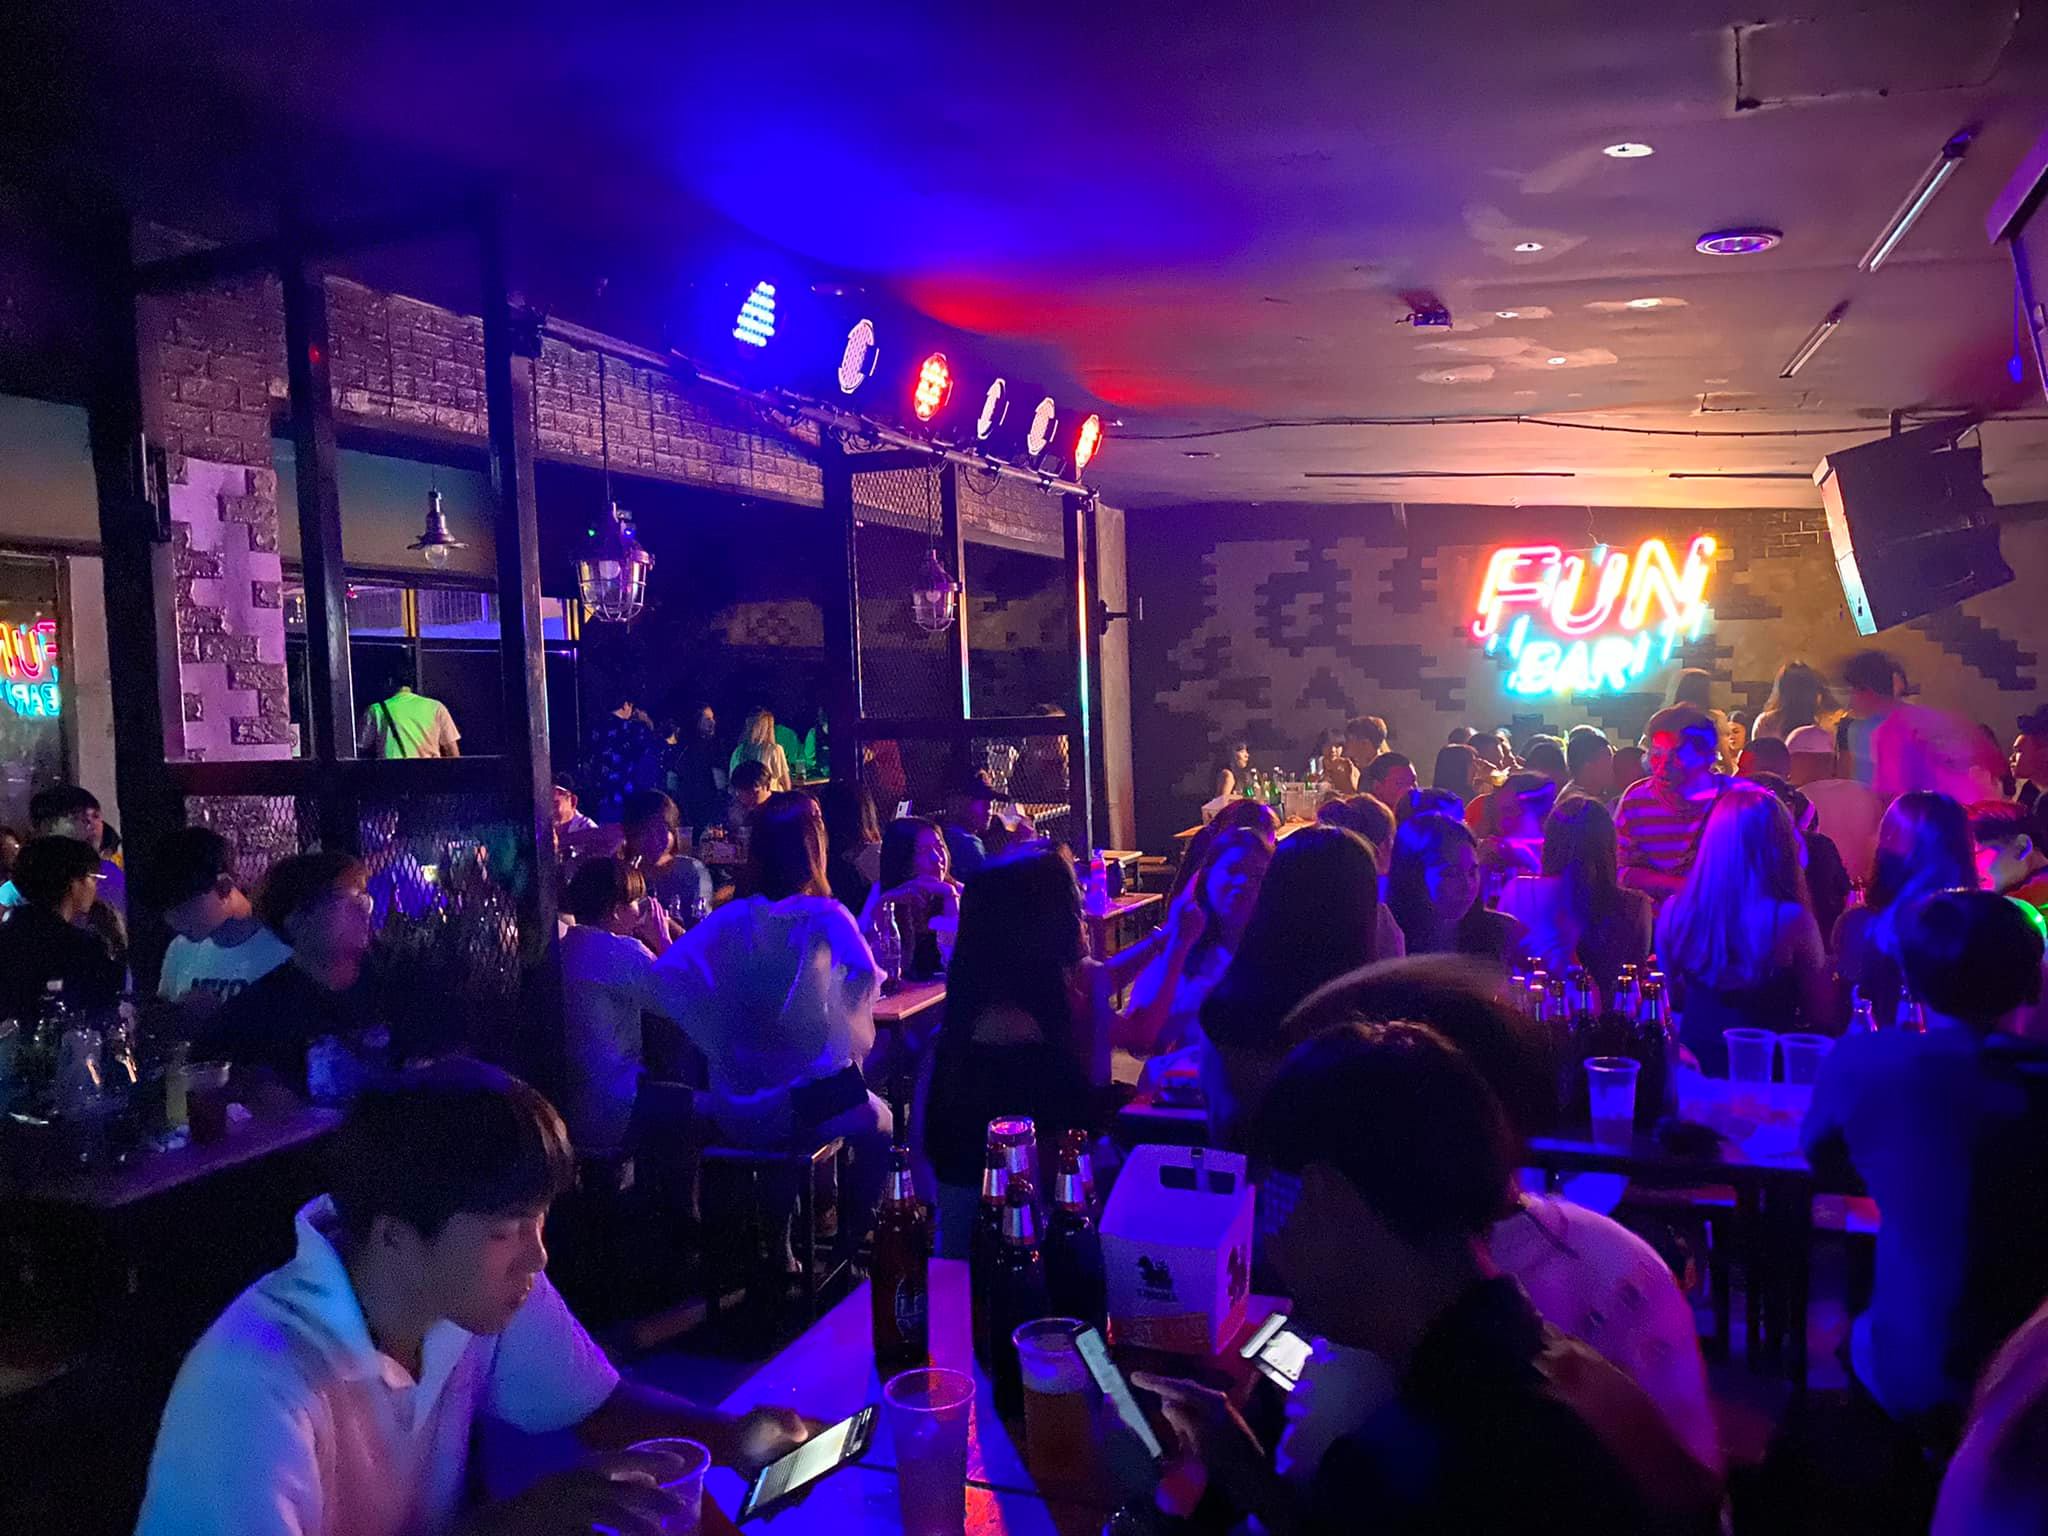 Fun Bar Bkk (Fun Bar Bkk) : กรุงเทพมหานคร (Bangkok)